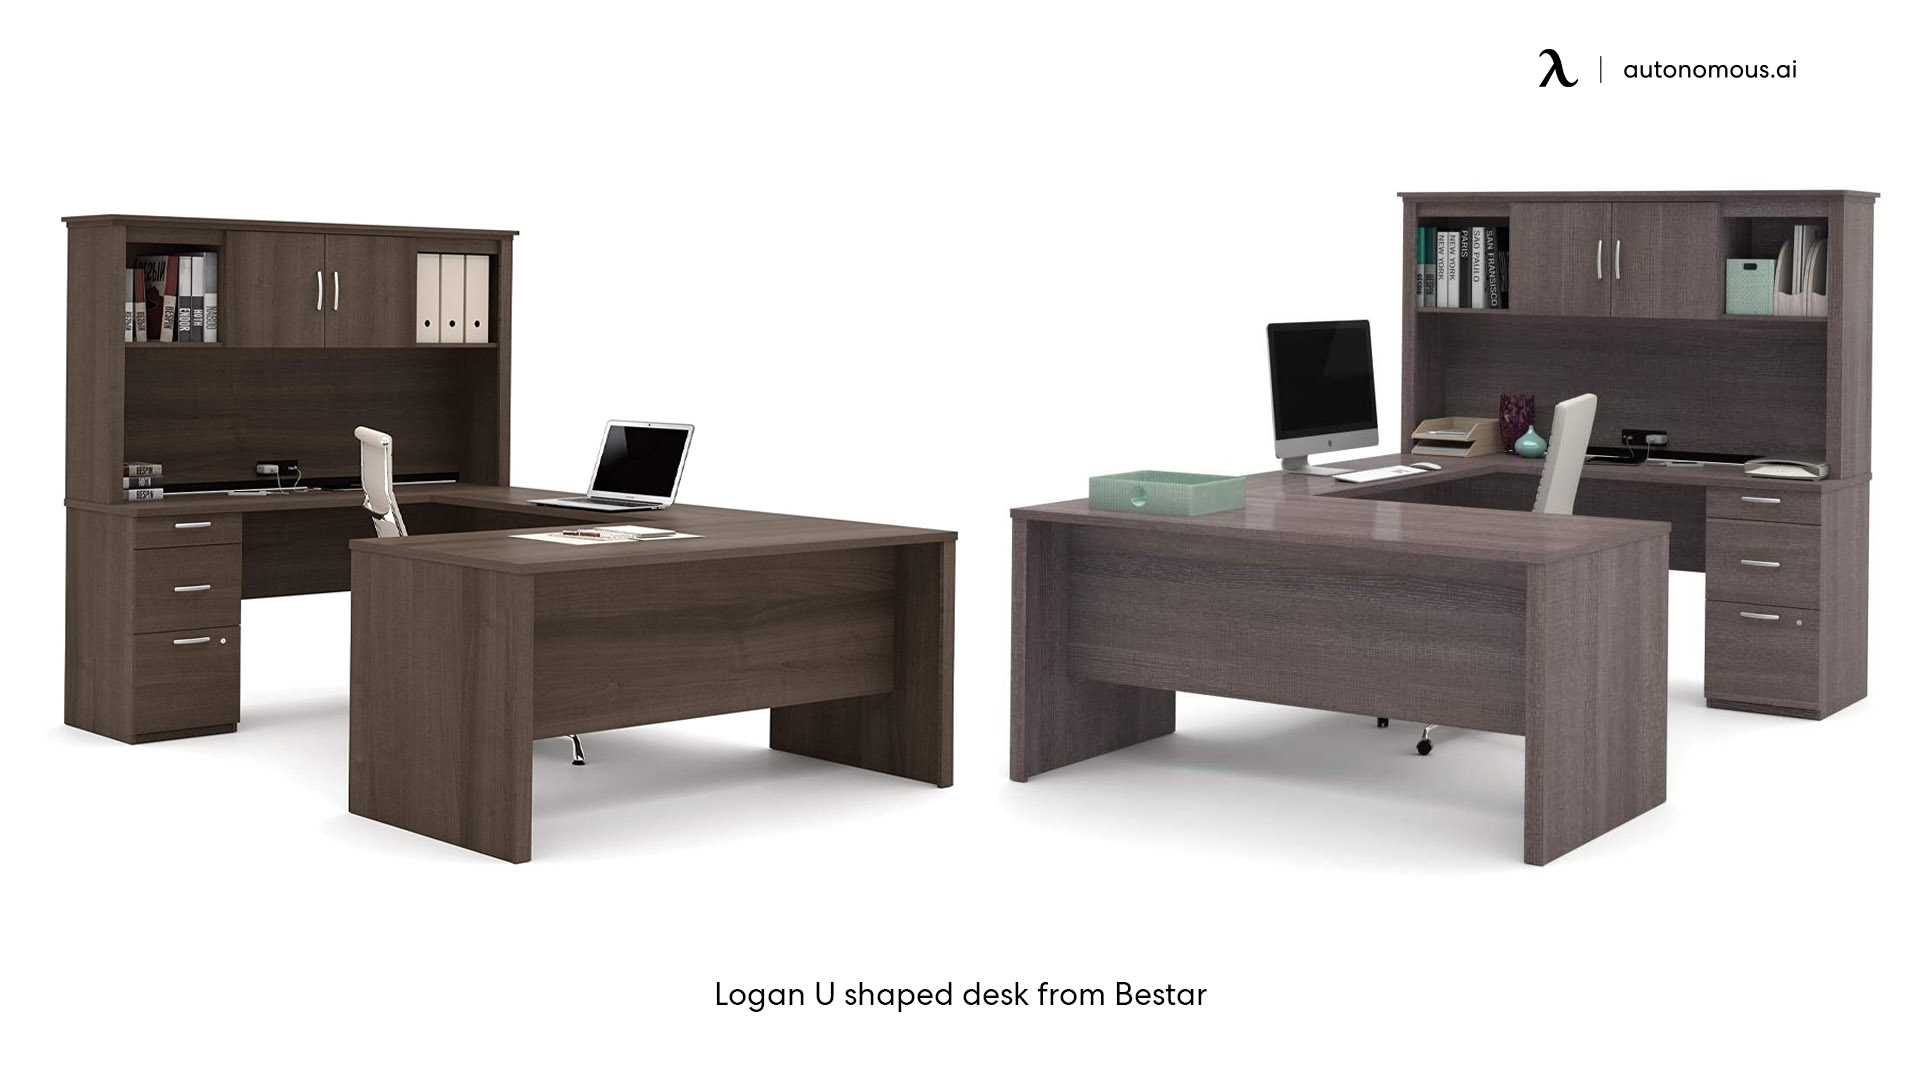 Logan U shaped desk from Bestar